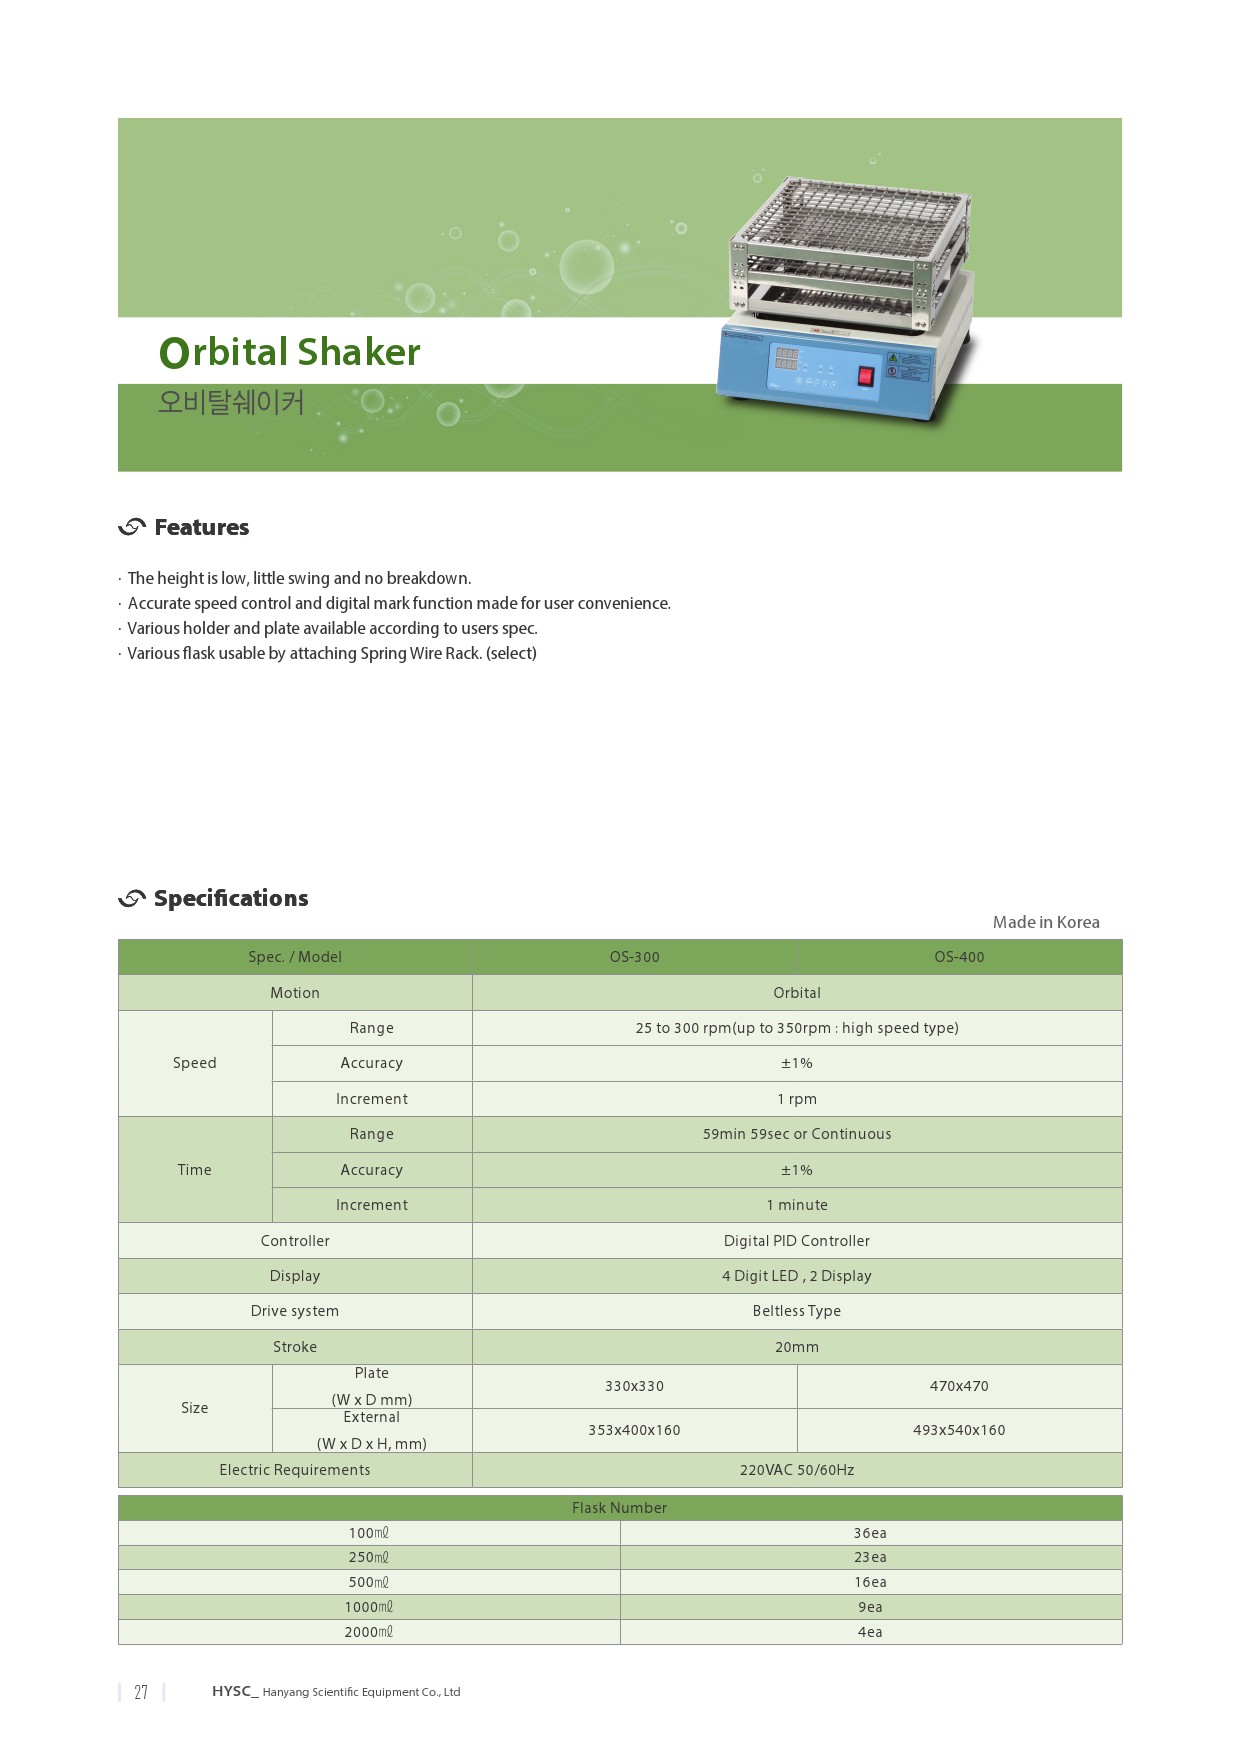 HYSC_Introduction_Obital Shaker-1.jpg